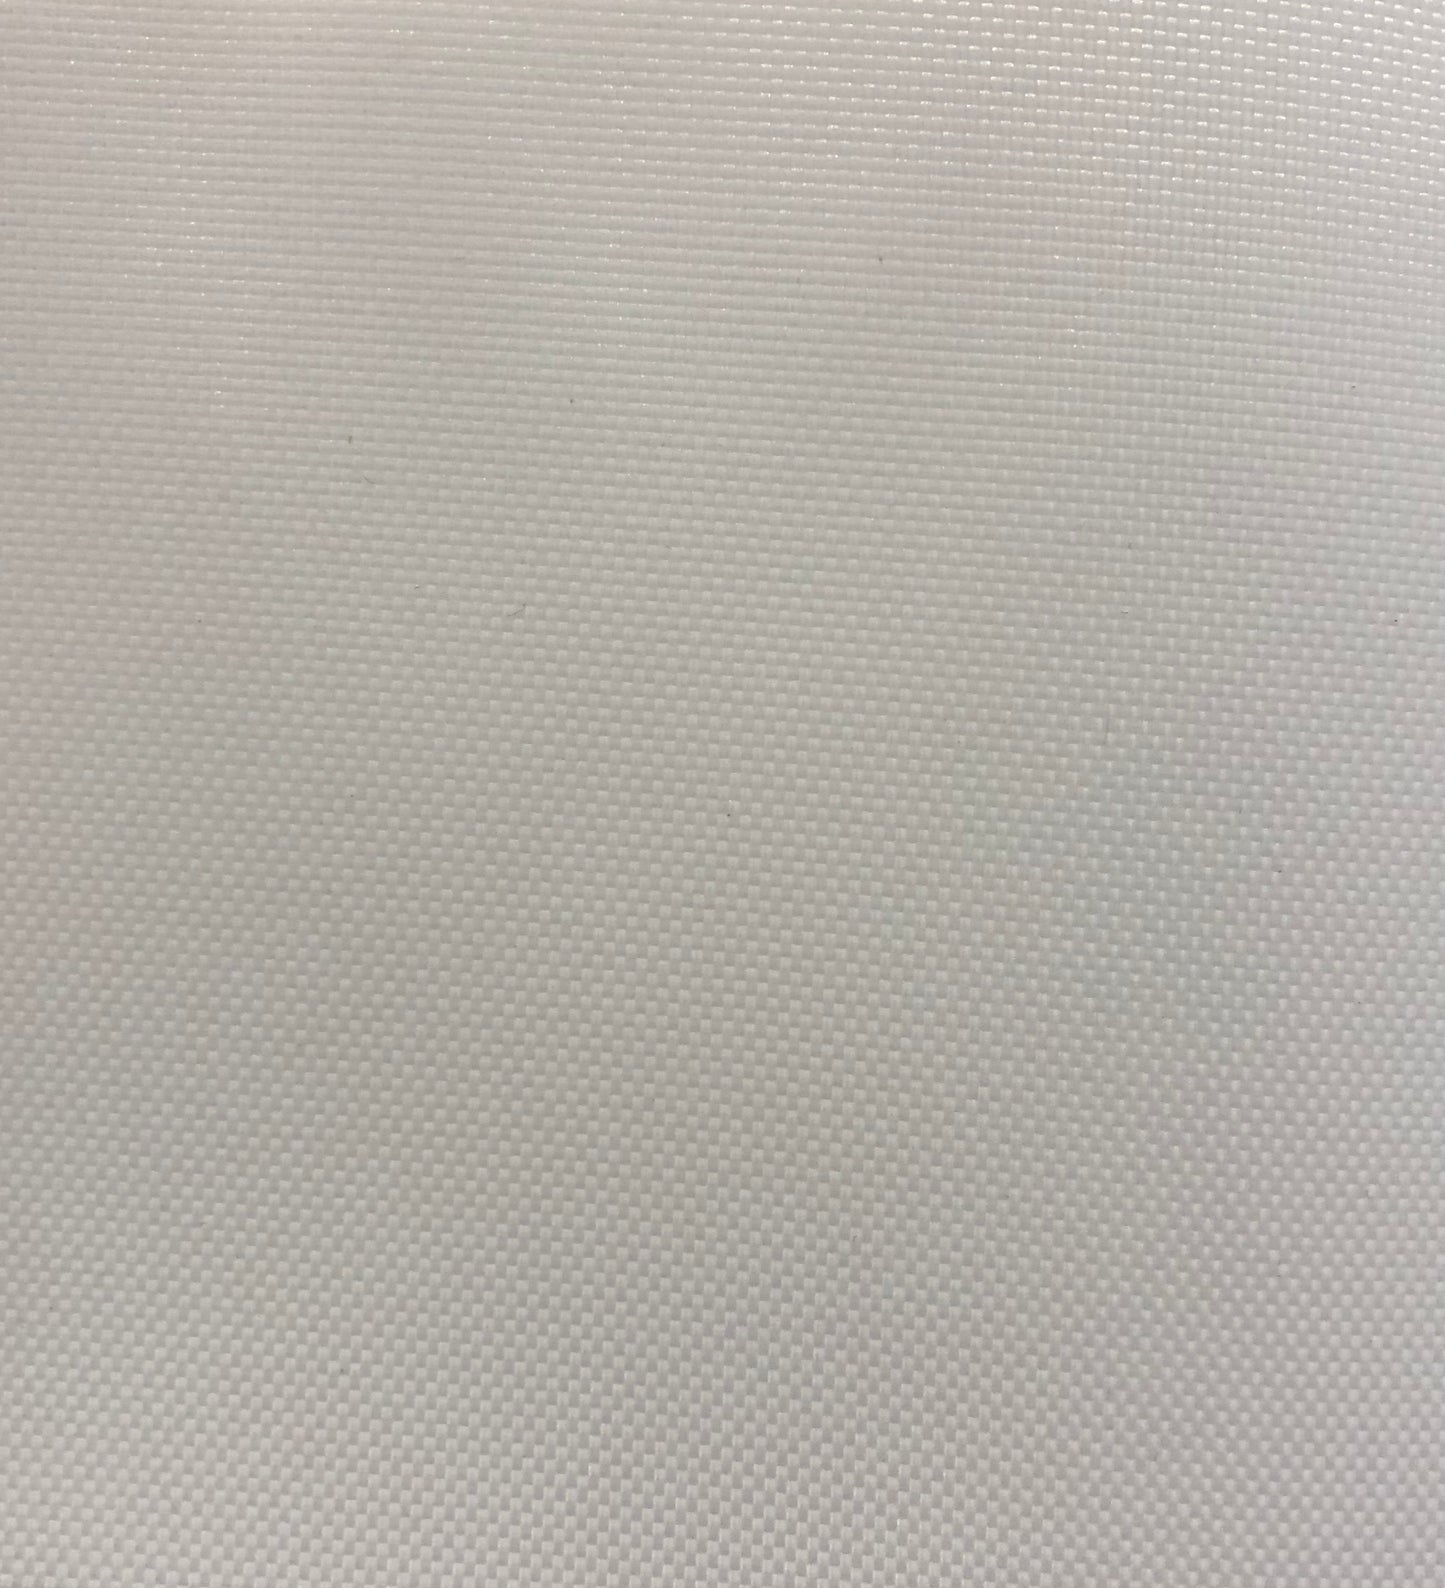 500 Denier Canopy Polyester, Coated, UV & FR - Optic White (Sold per Yard)